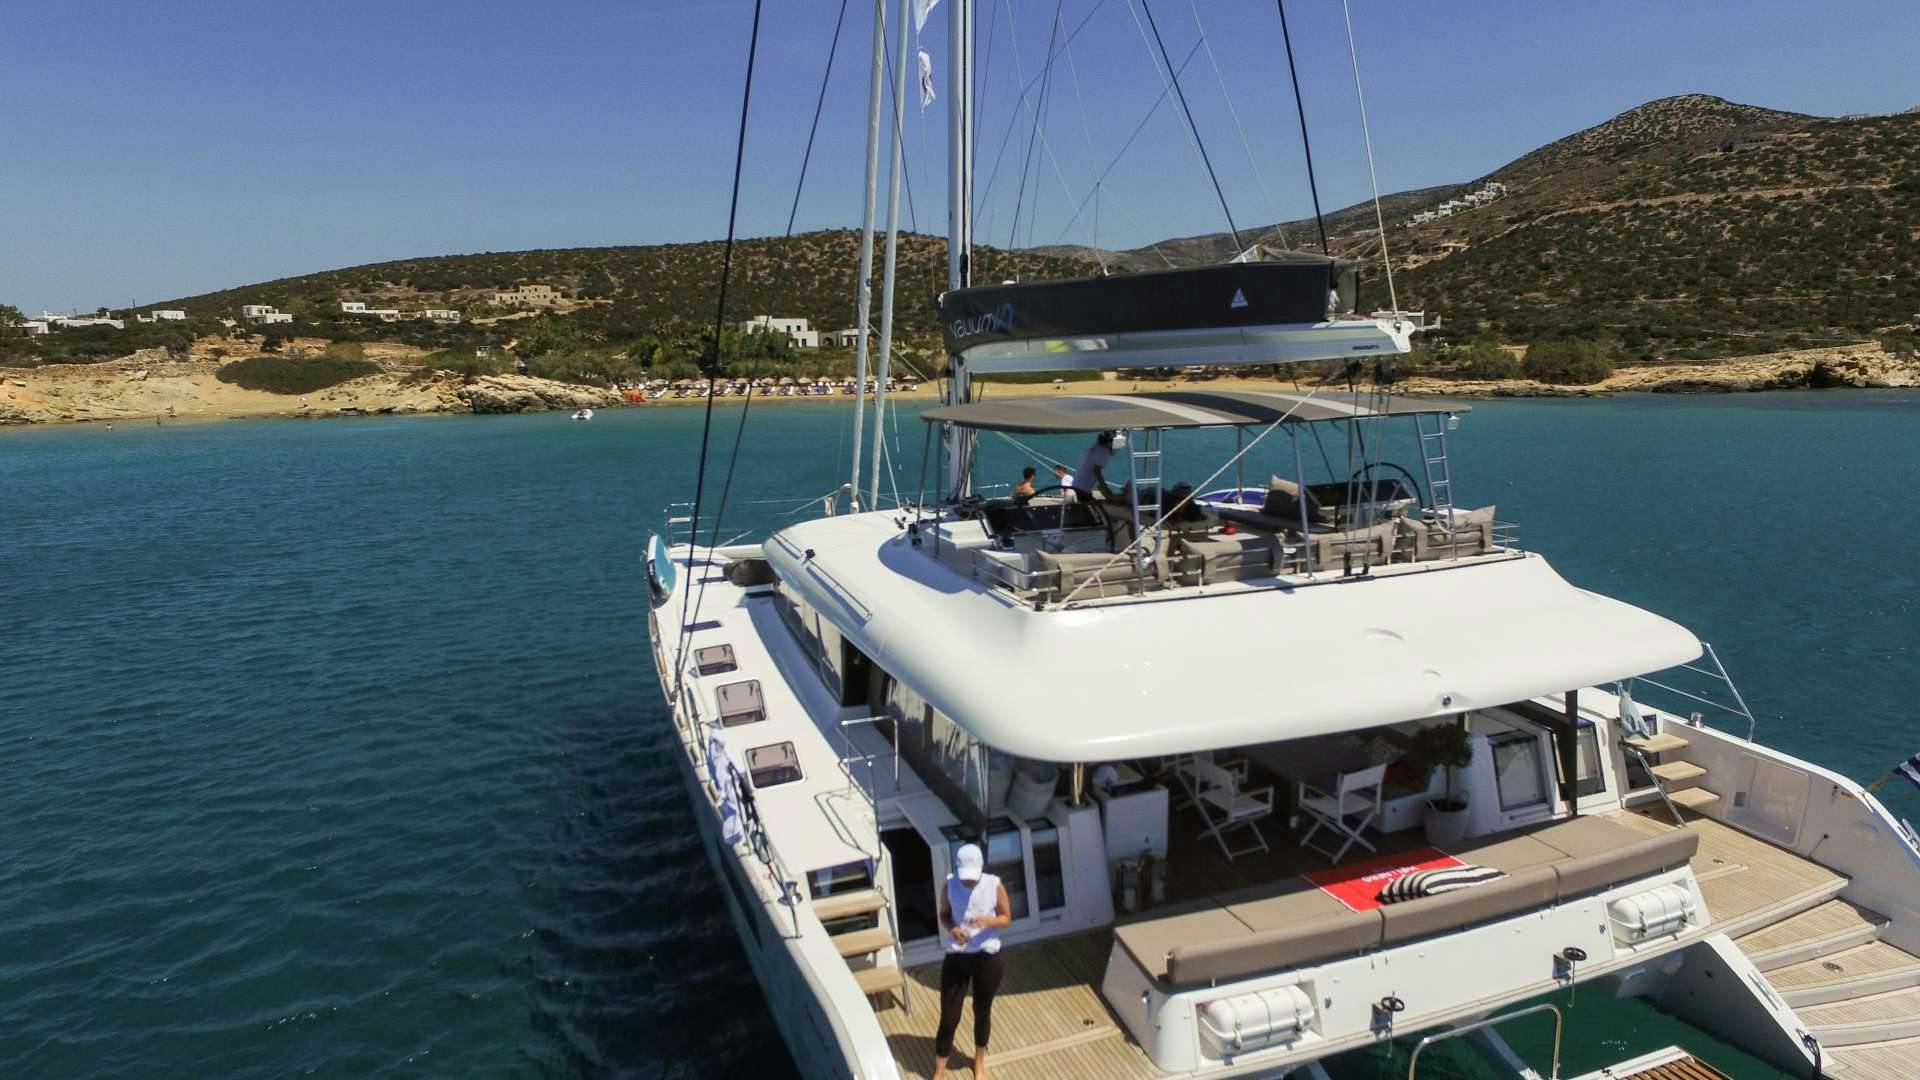 valium62 - Yacht Charter Calliaqua & Boat hire in Greece 1